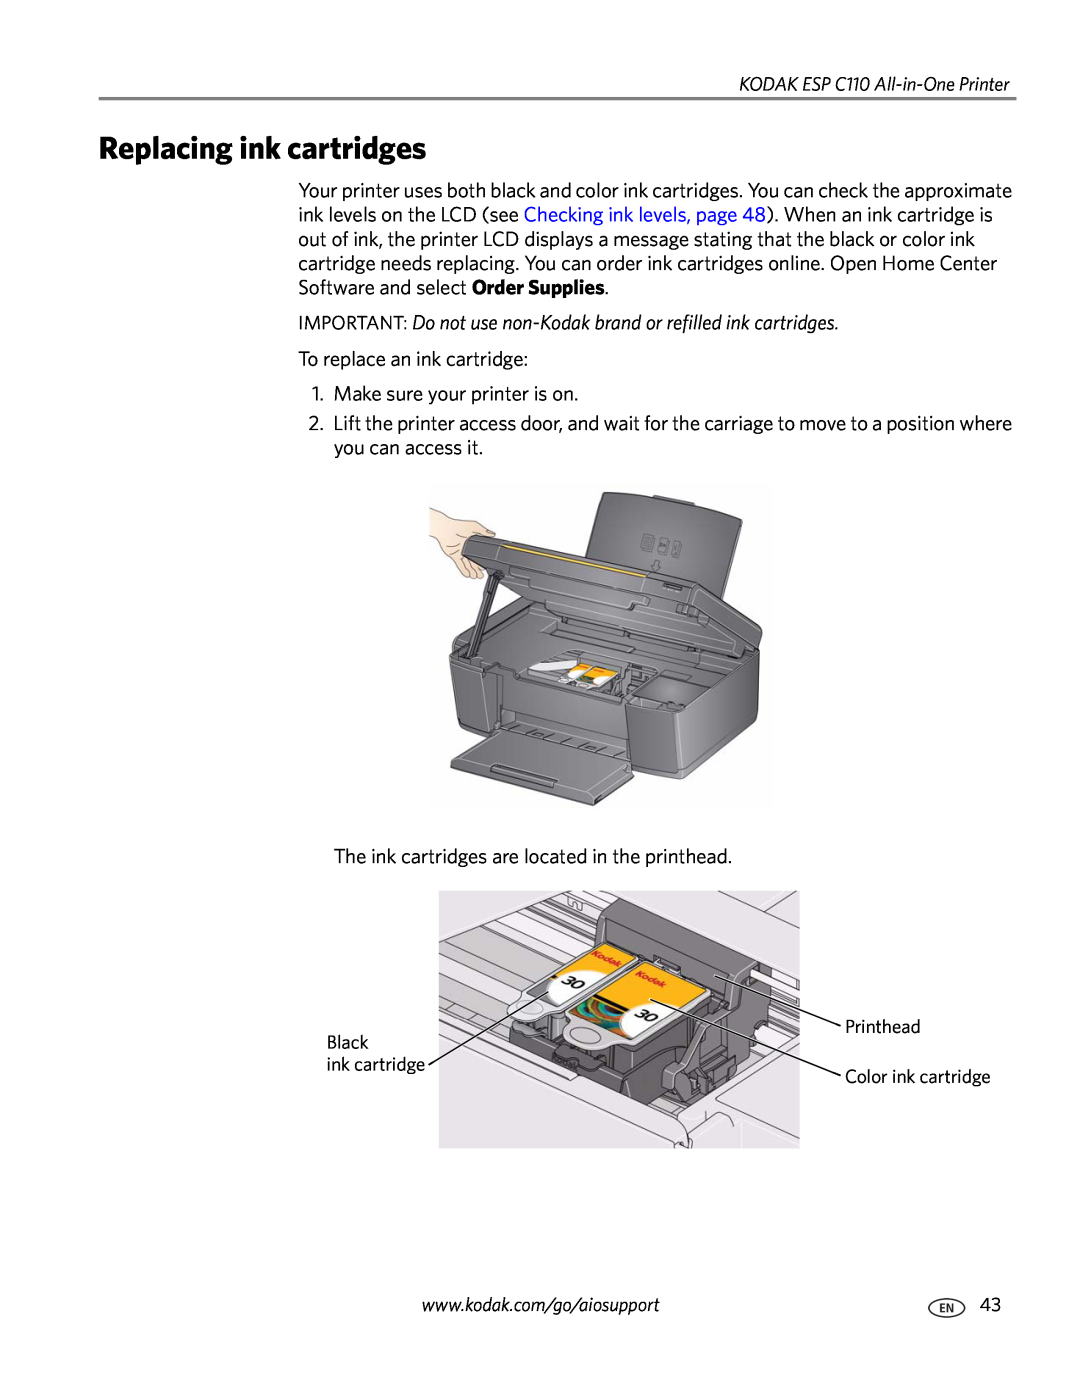 Kodak C110 manual Replacing ink cartridges, IMPORTANT Do not use non-Kodak brand or refilled ink cartridges 